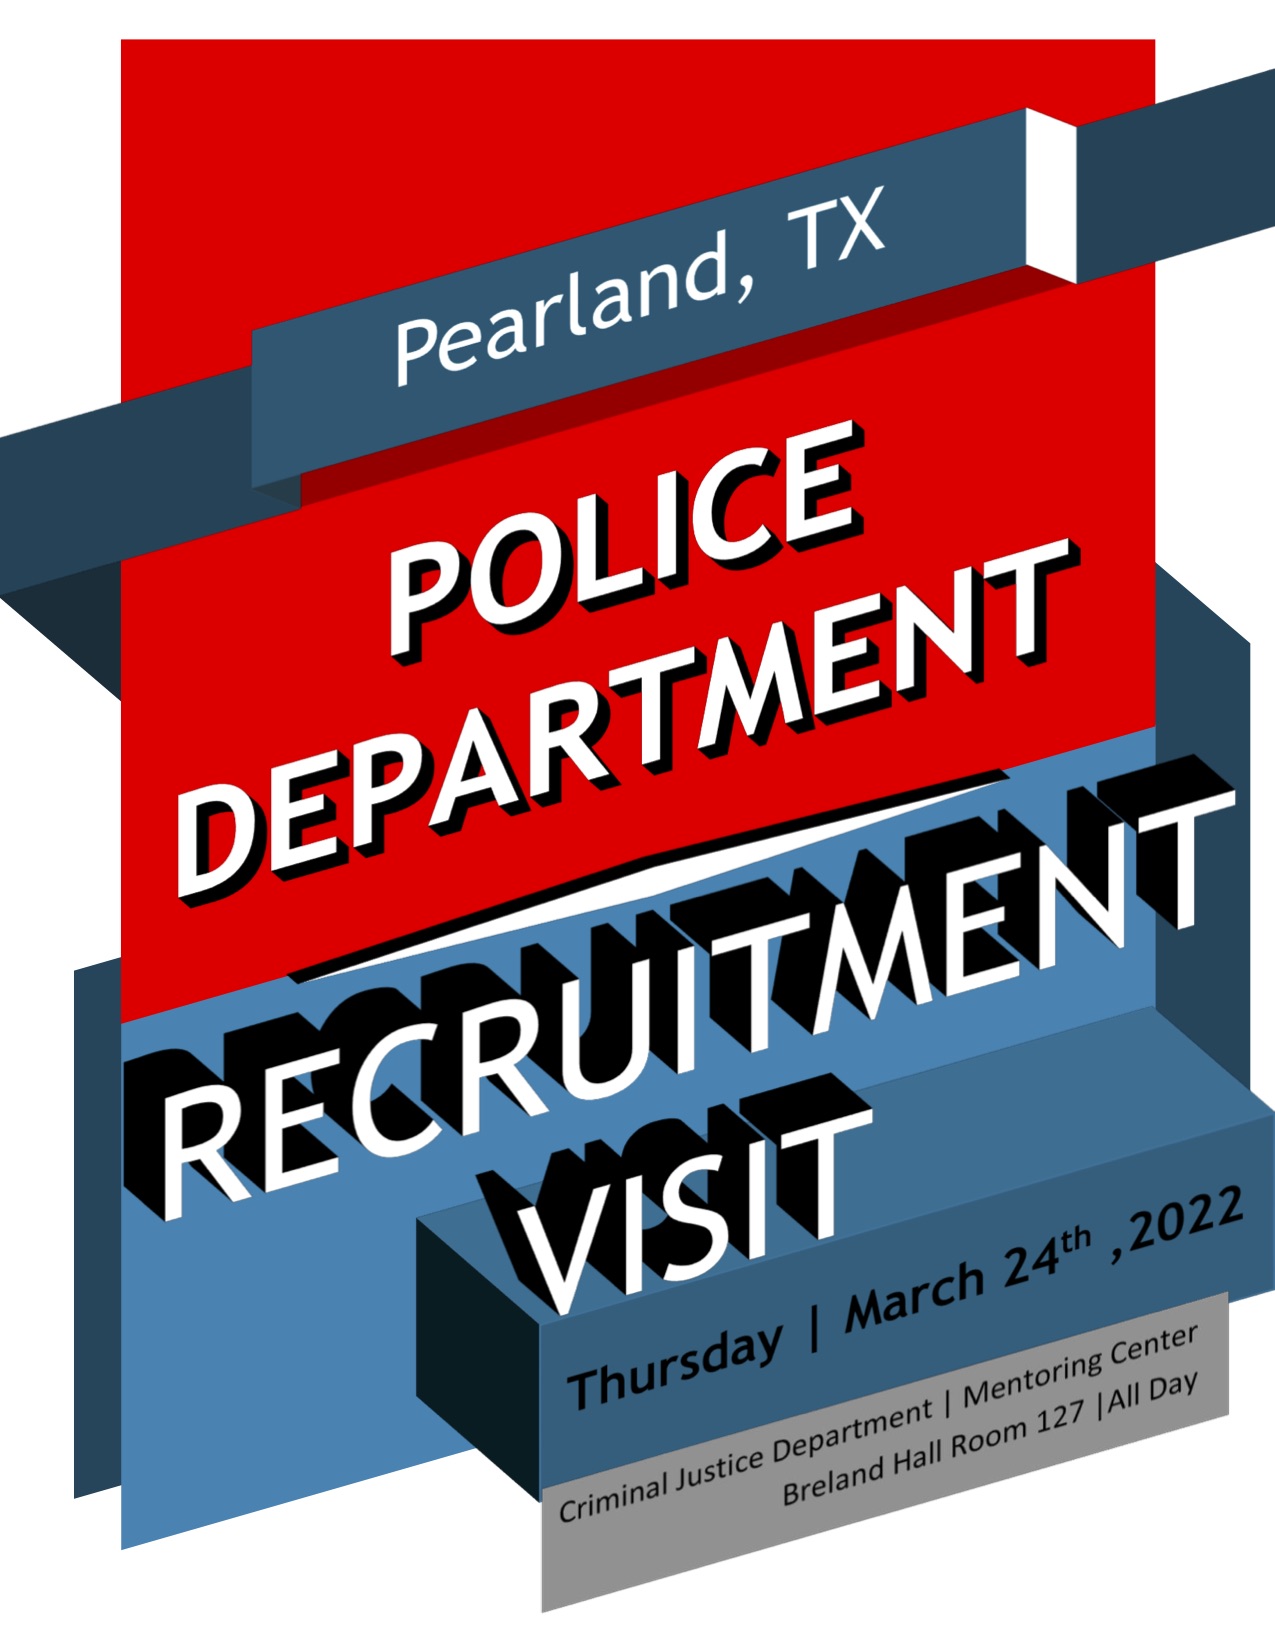 Pearland-police-department-visit.jpg